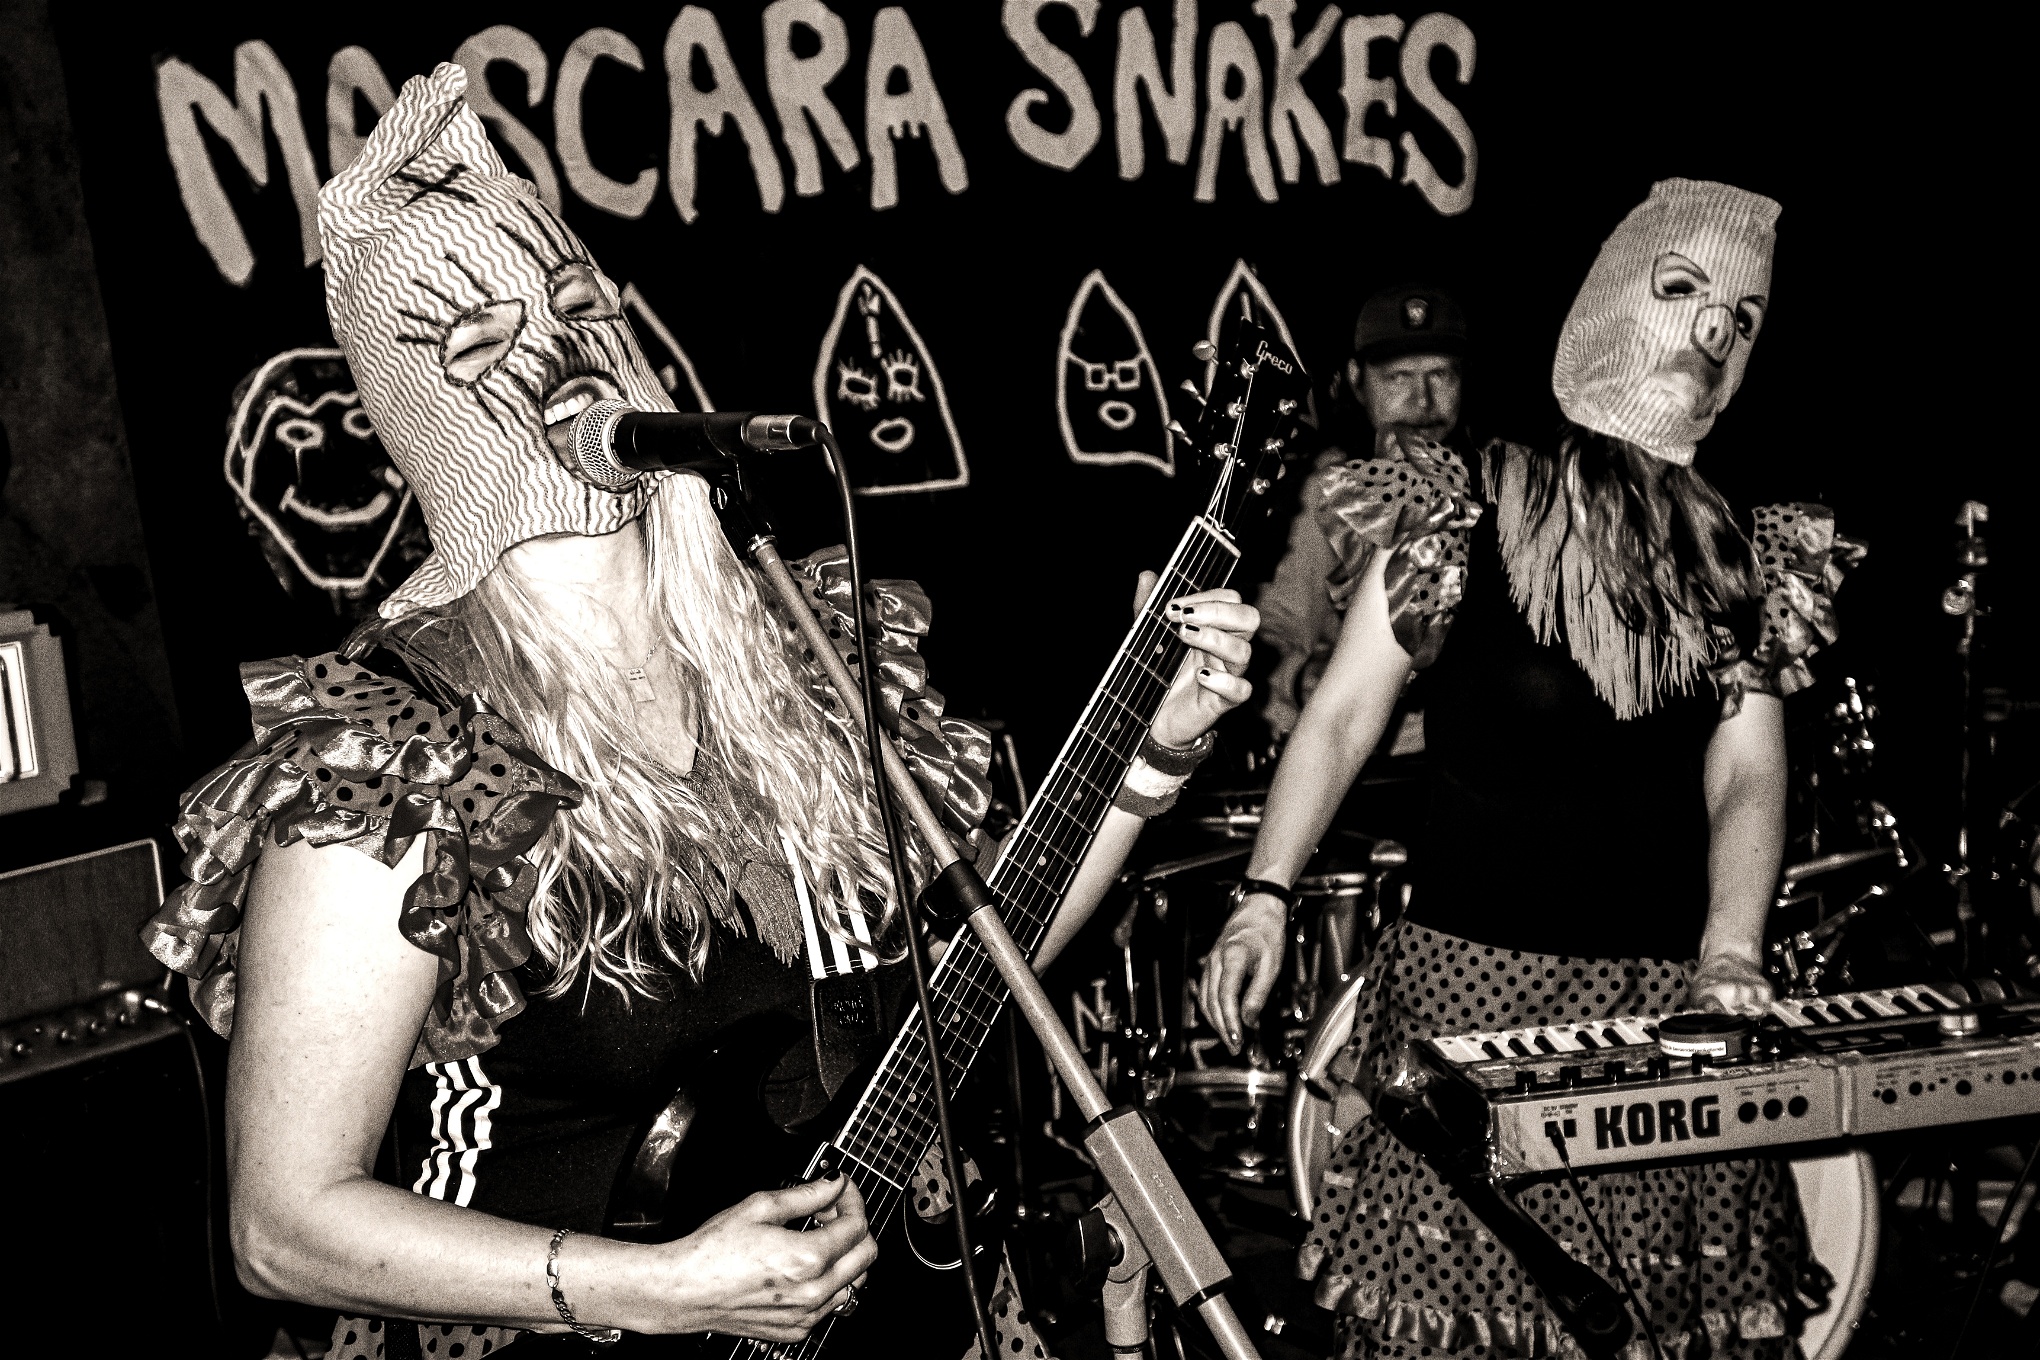 Mascara Snakes svensk punk